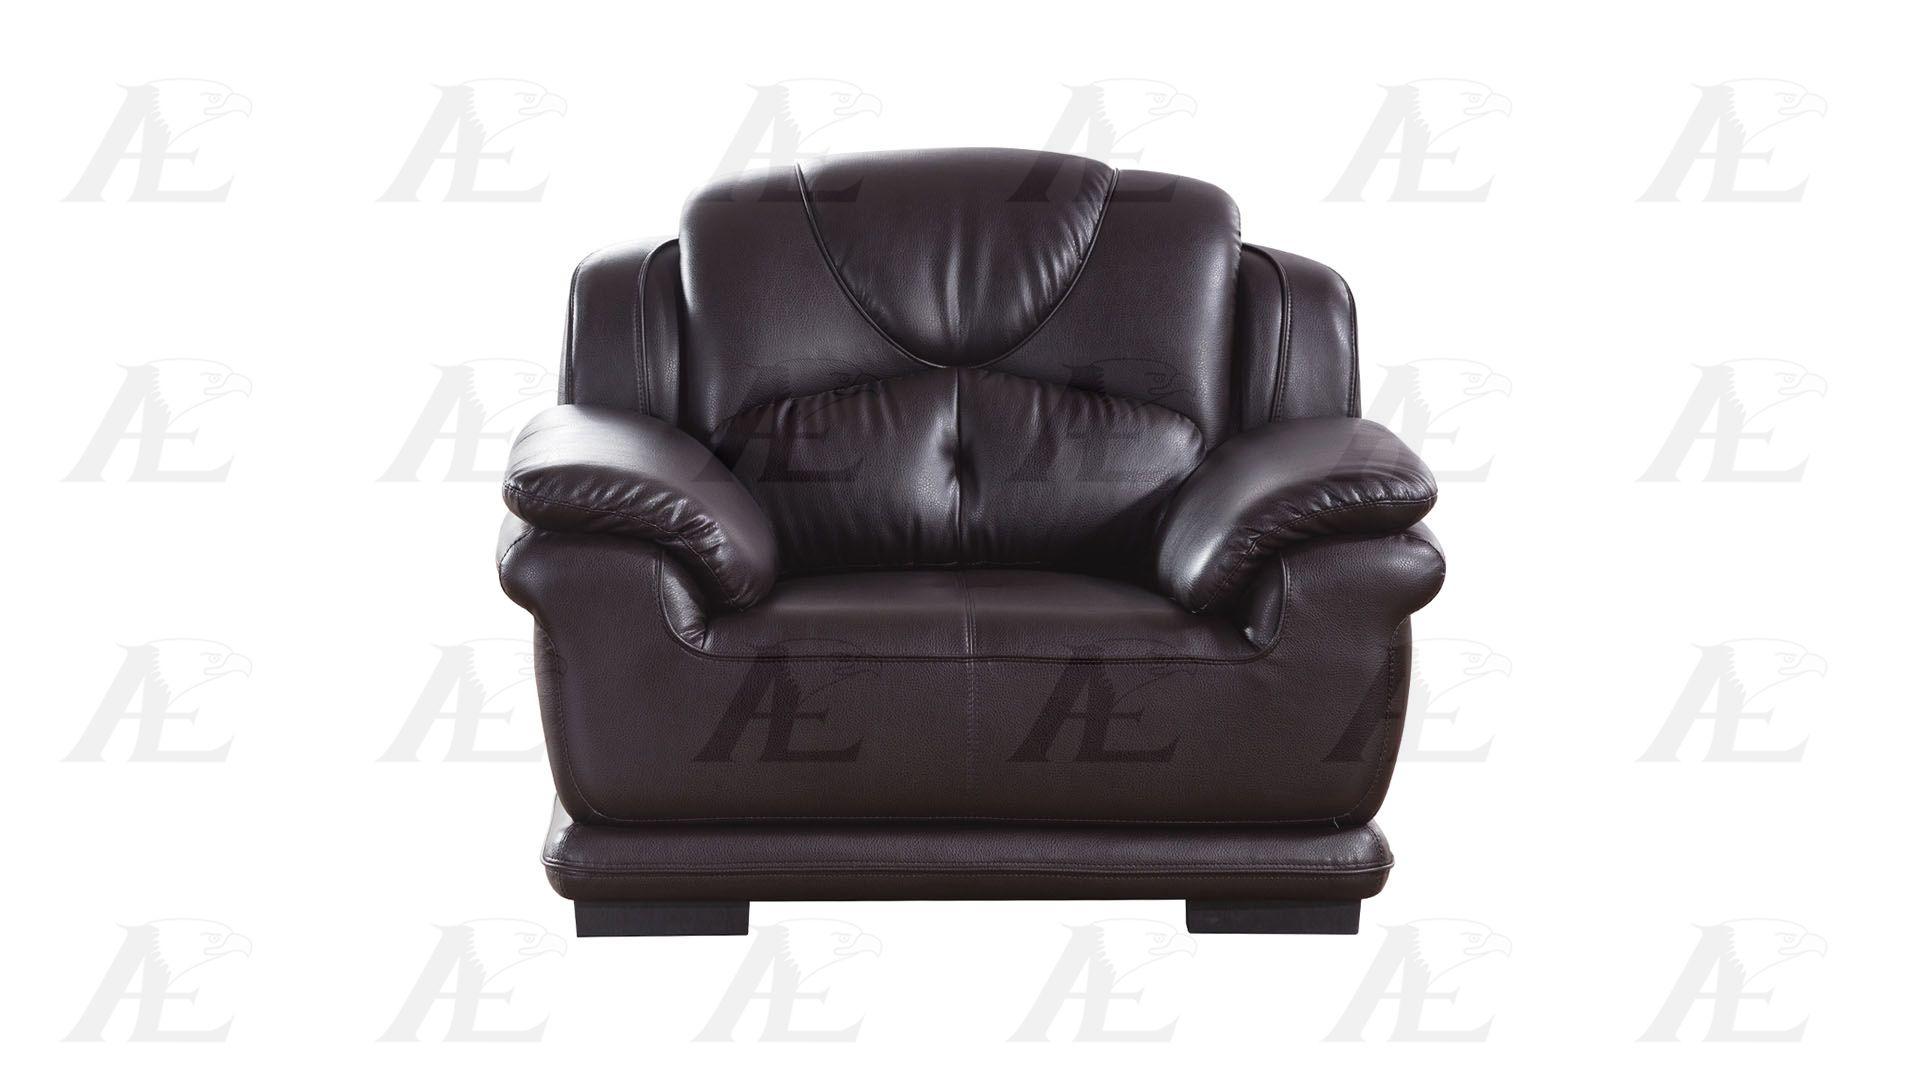 

    
AE601-DC 3Pcs American Eagle Furniture Sofa Loveseat and Chair Set
